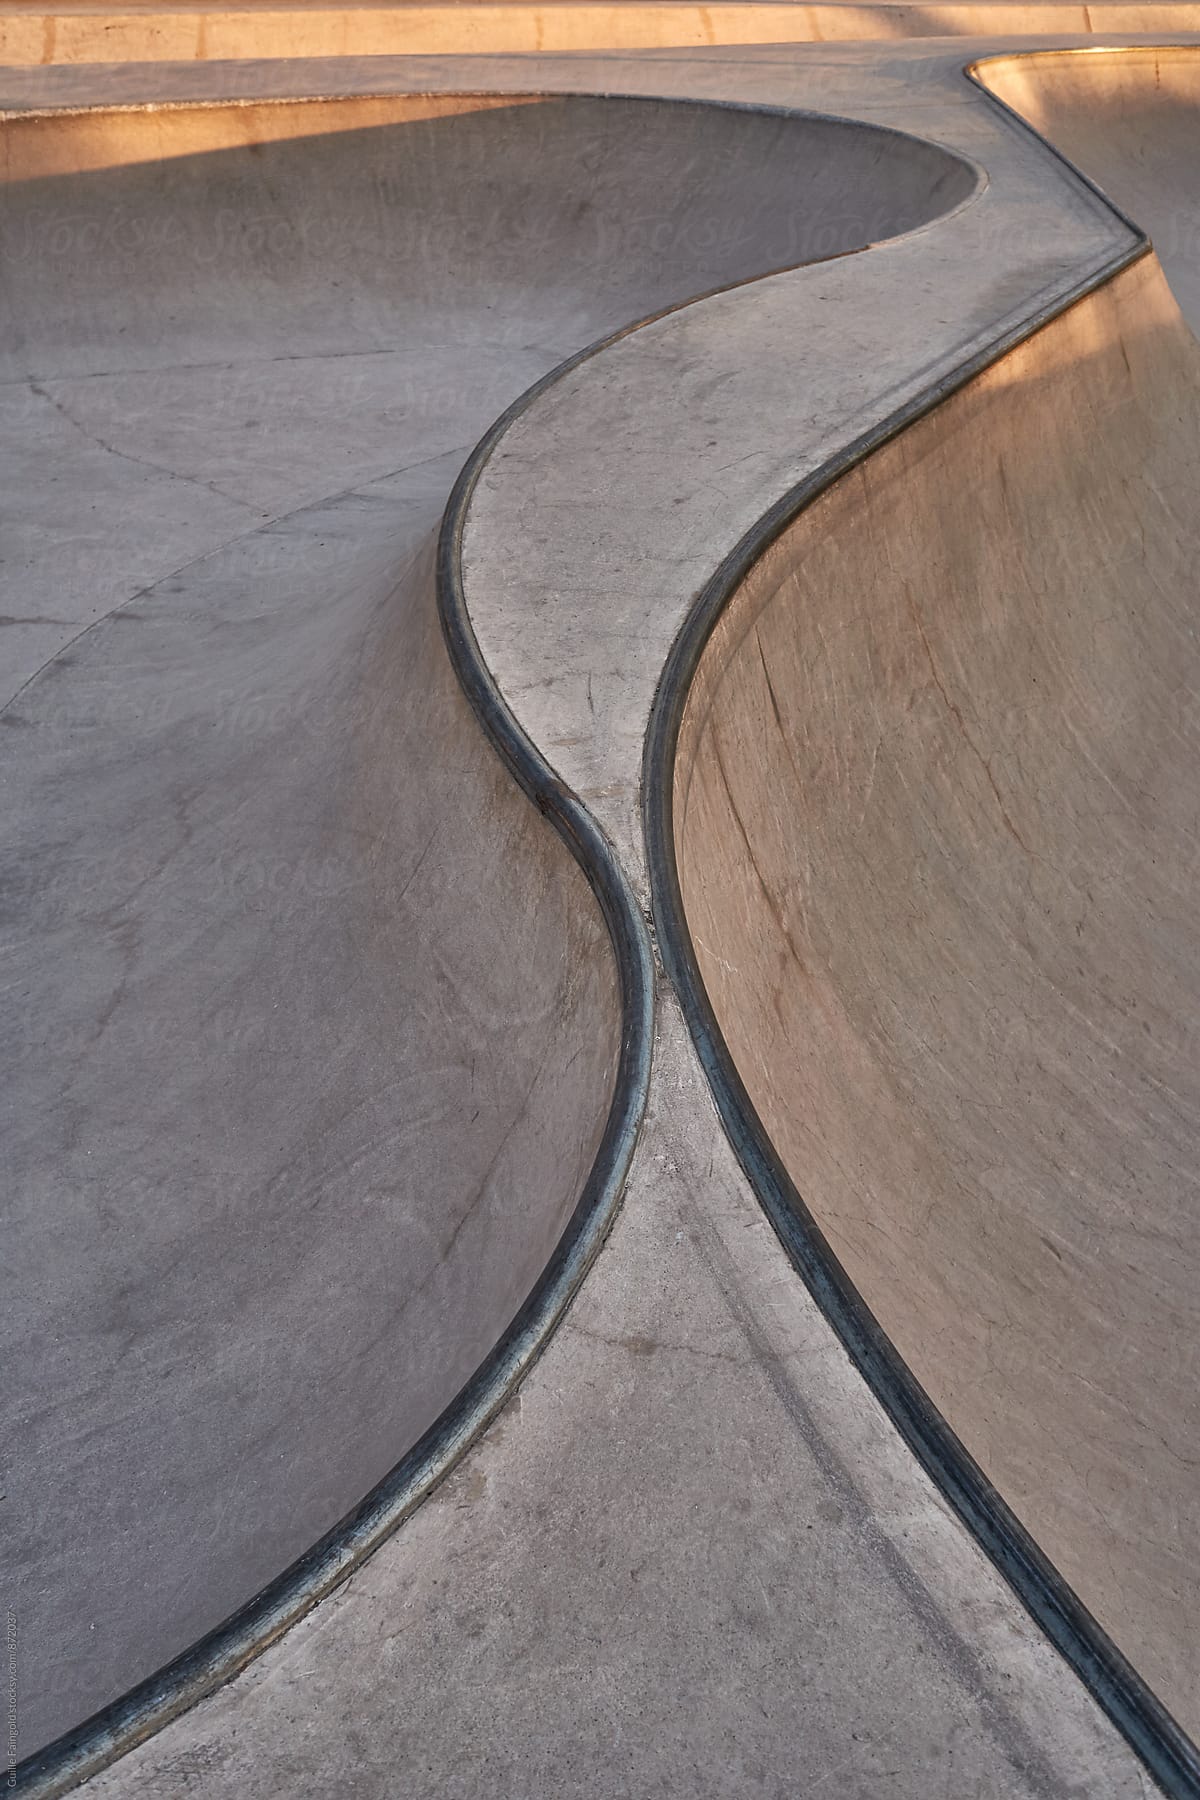 Concrete bowls in skate park